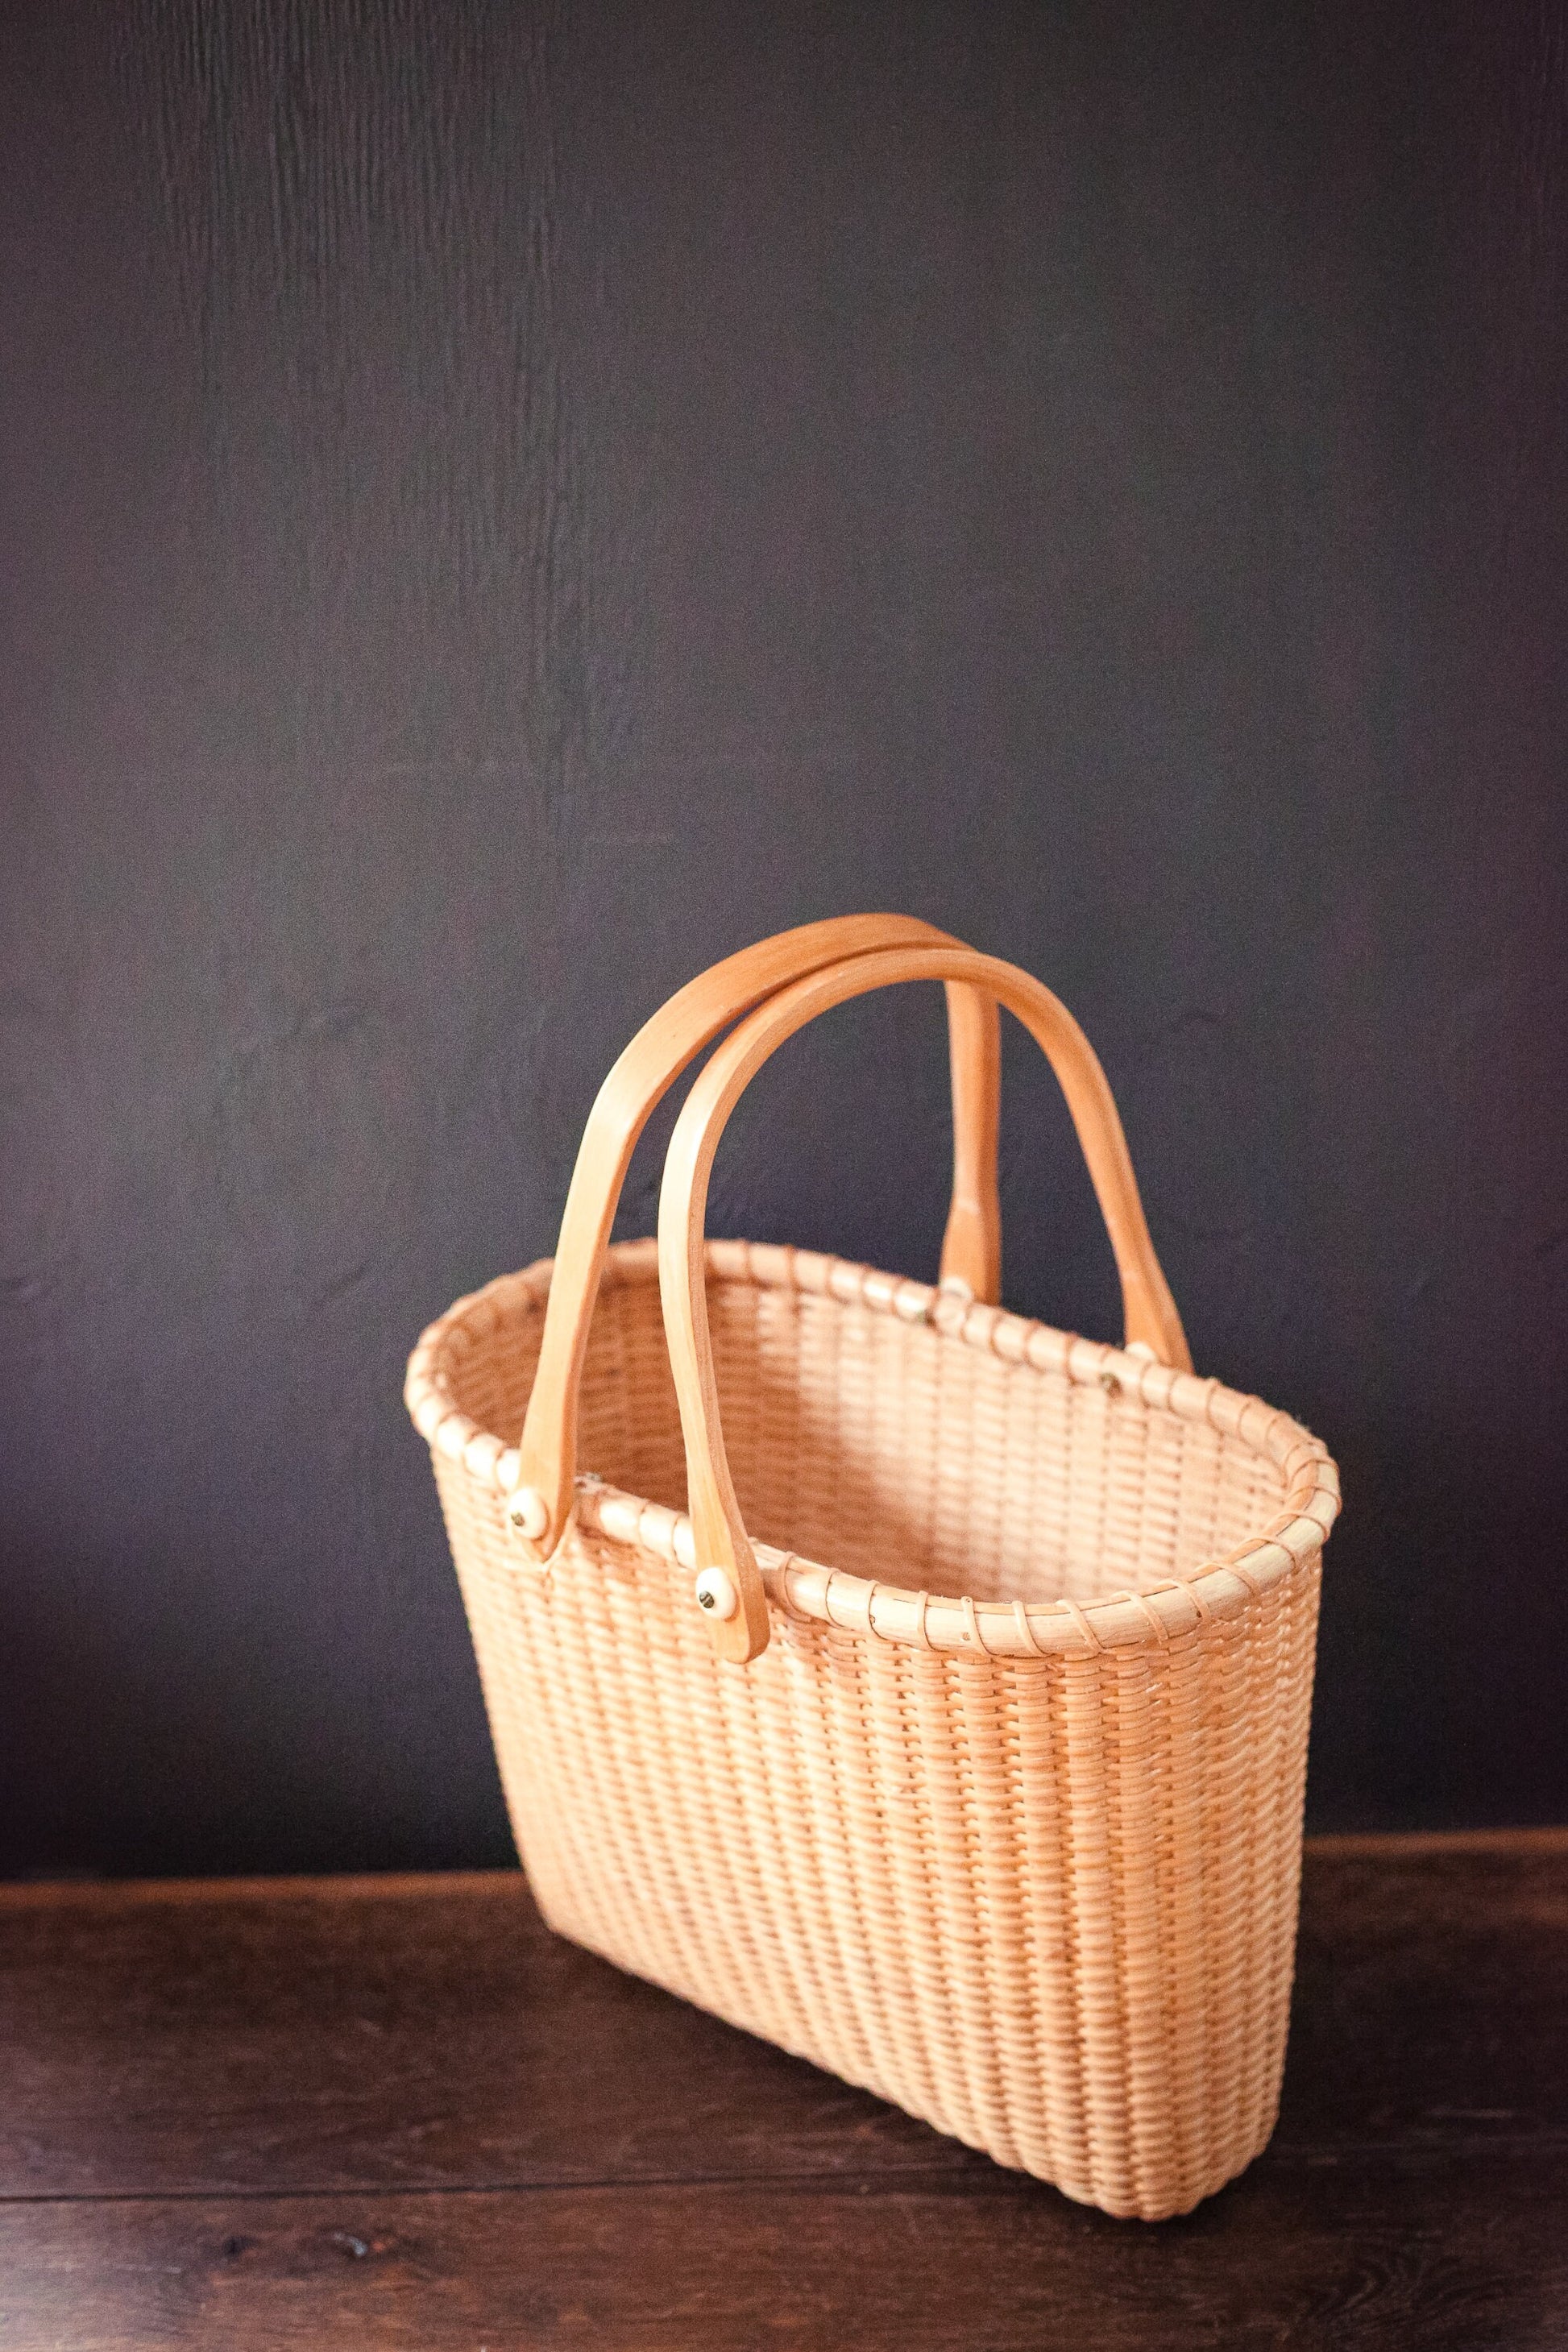 Skinny Nantucket Basket with Handles & Flat Wood Bottom - Vintage Nantucket Basket Purse